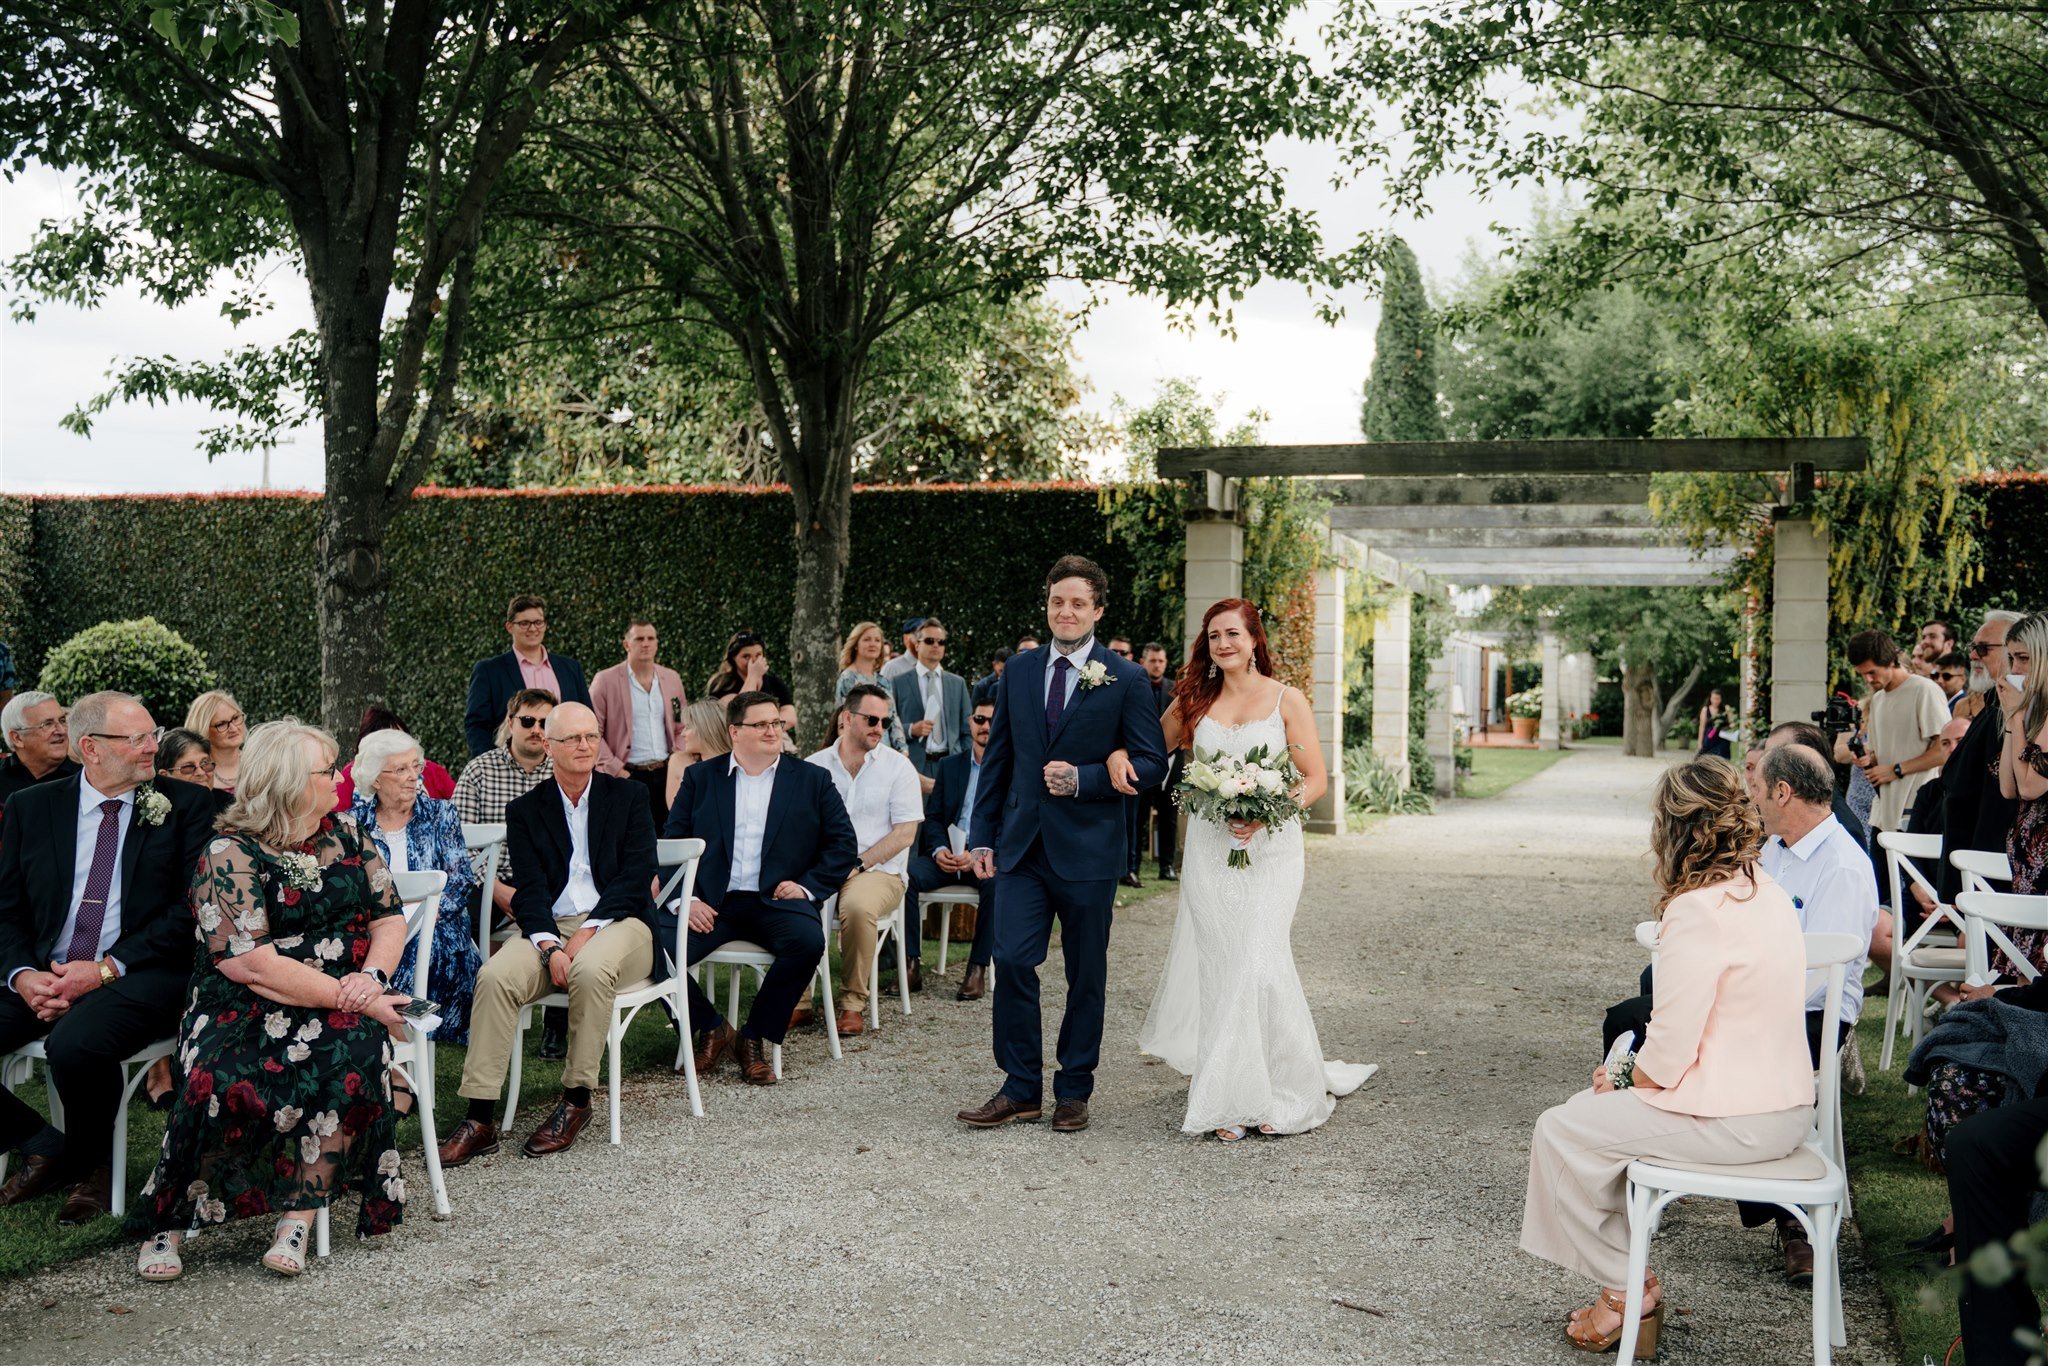 bushmere arms Wedding | best wedding venue | gisborne venue | auckland wedding photographer | Auckland videographer | New Zealand wedding Photo | astral bridal